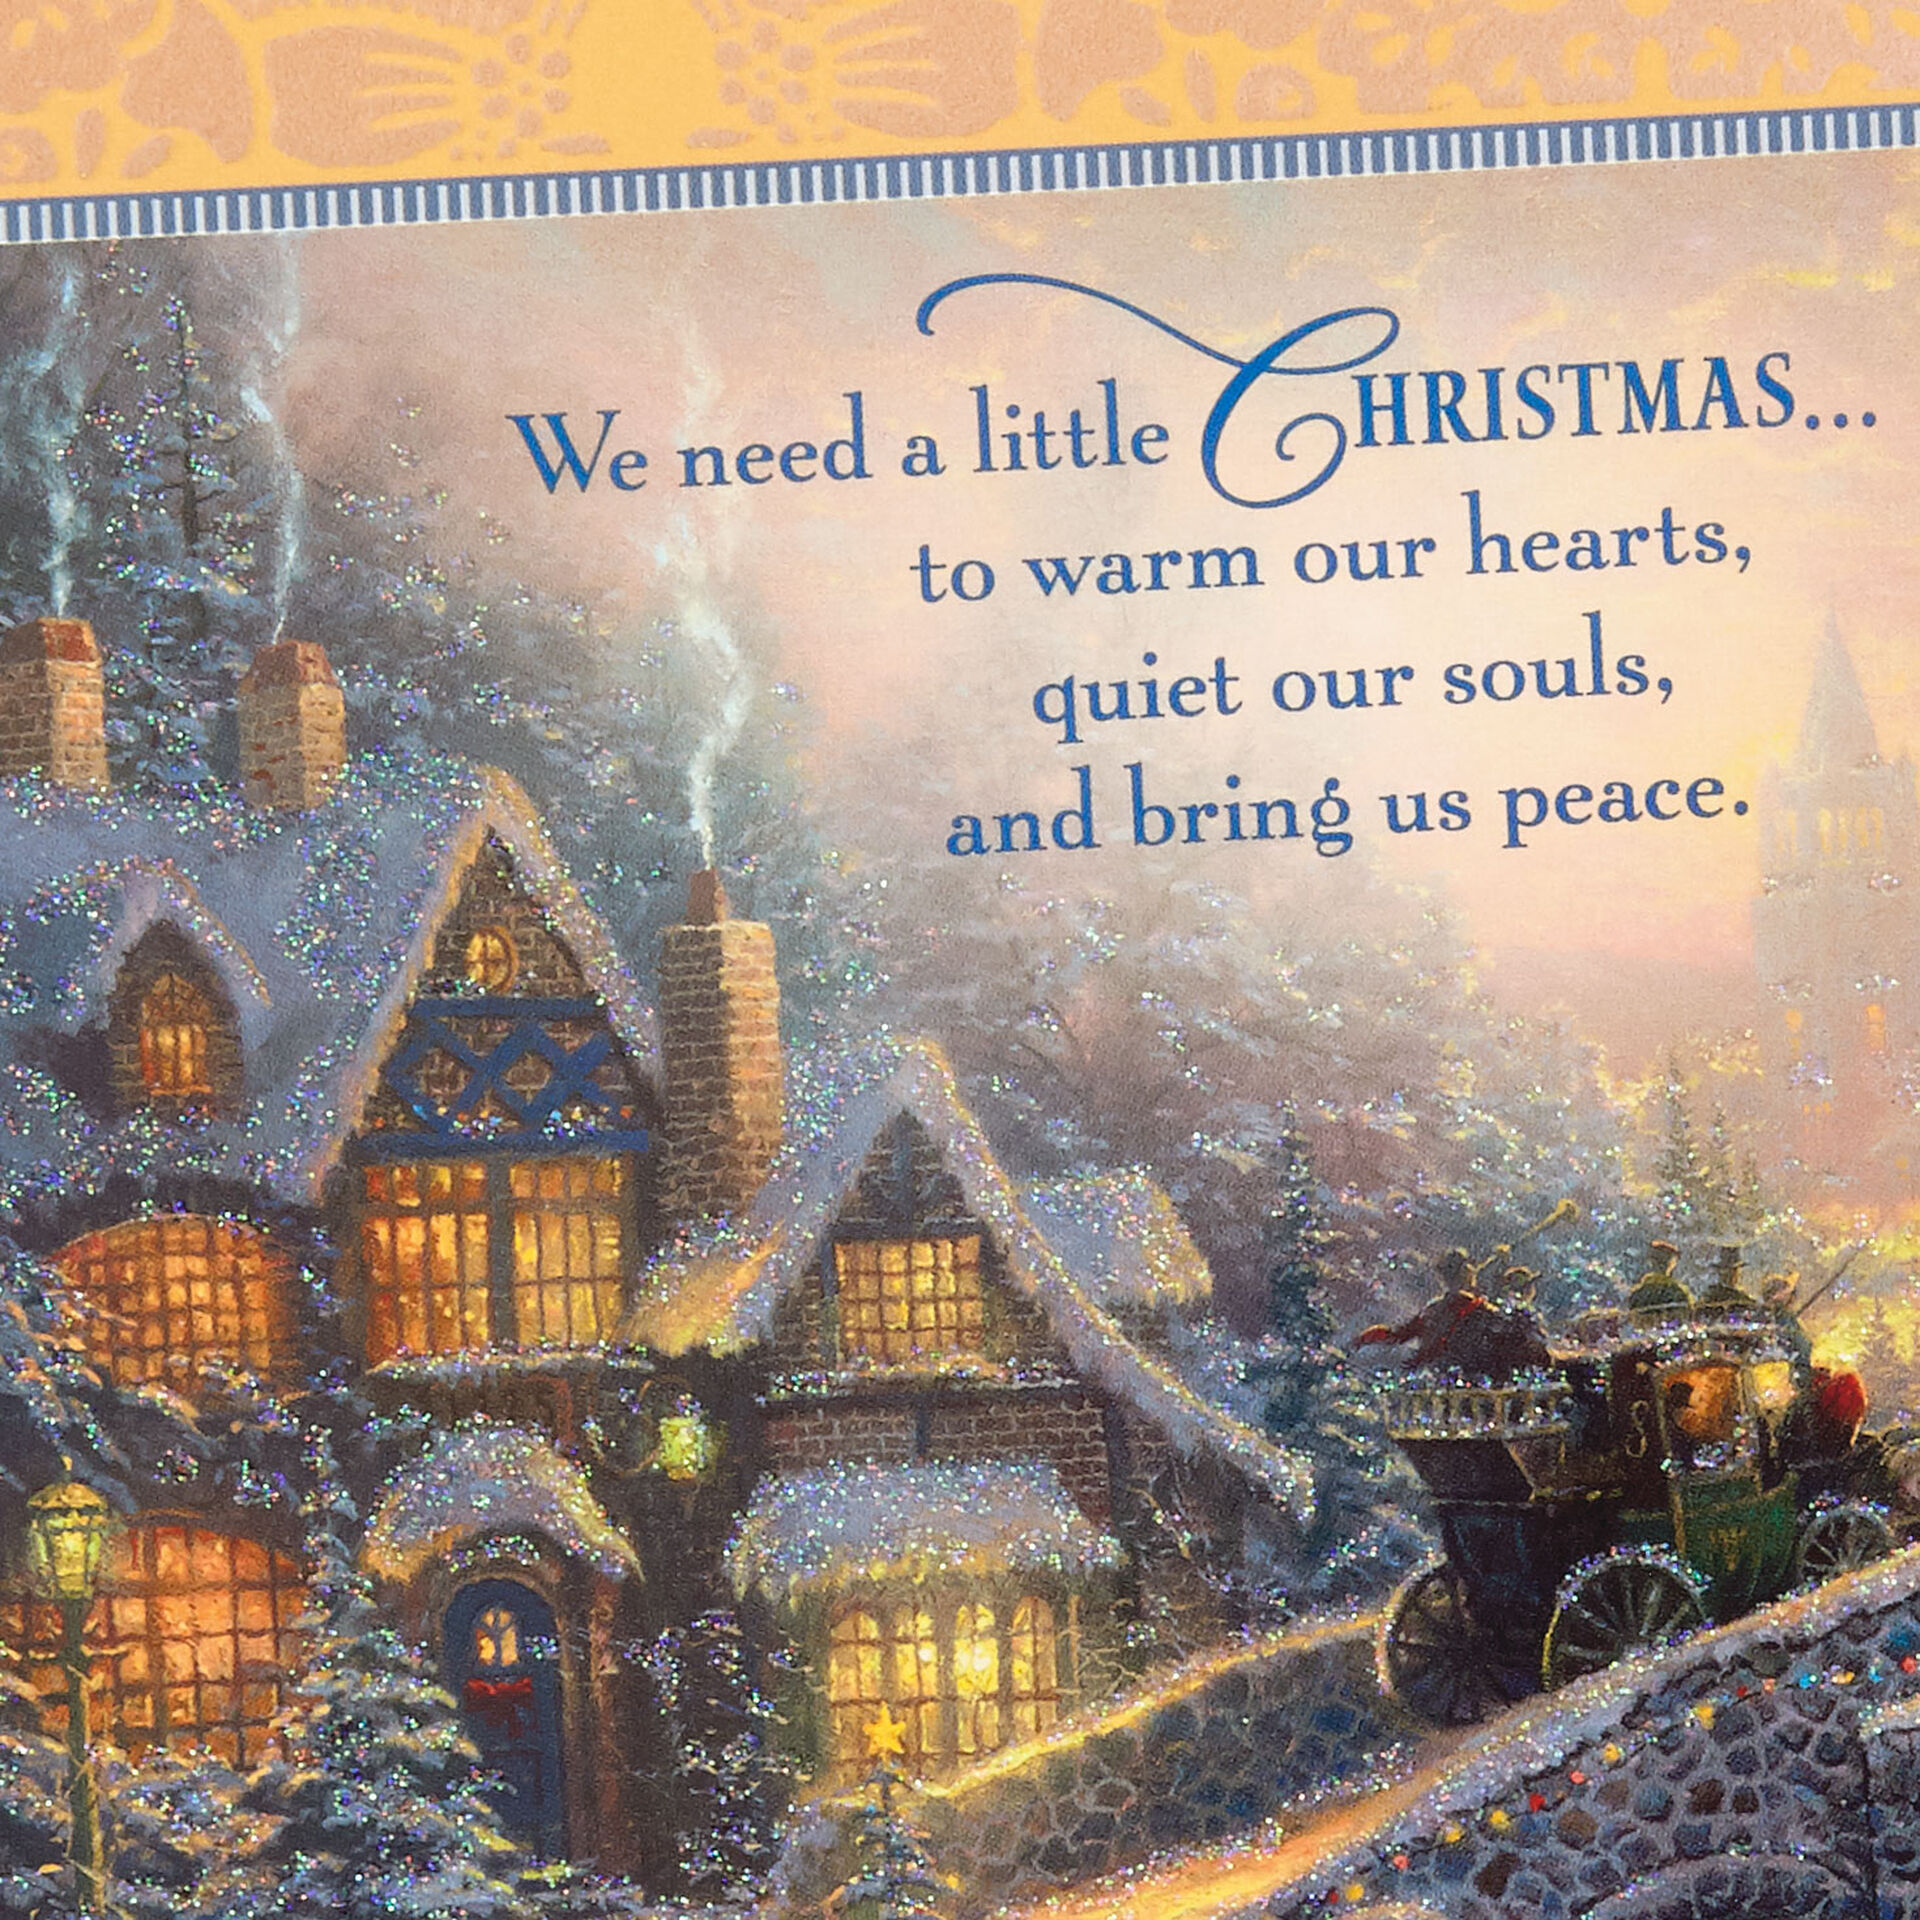 Thomas Kinkade Snowy Village People Like You Christmas Card Greeting